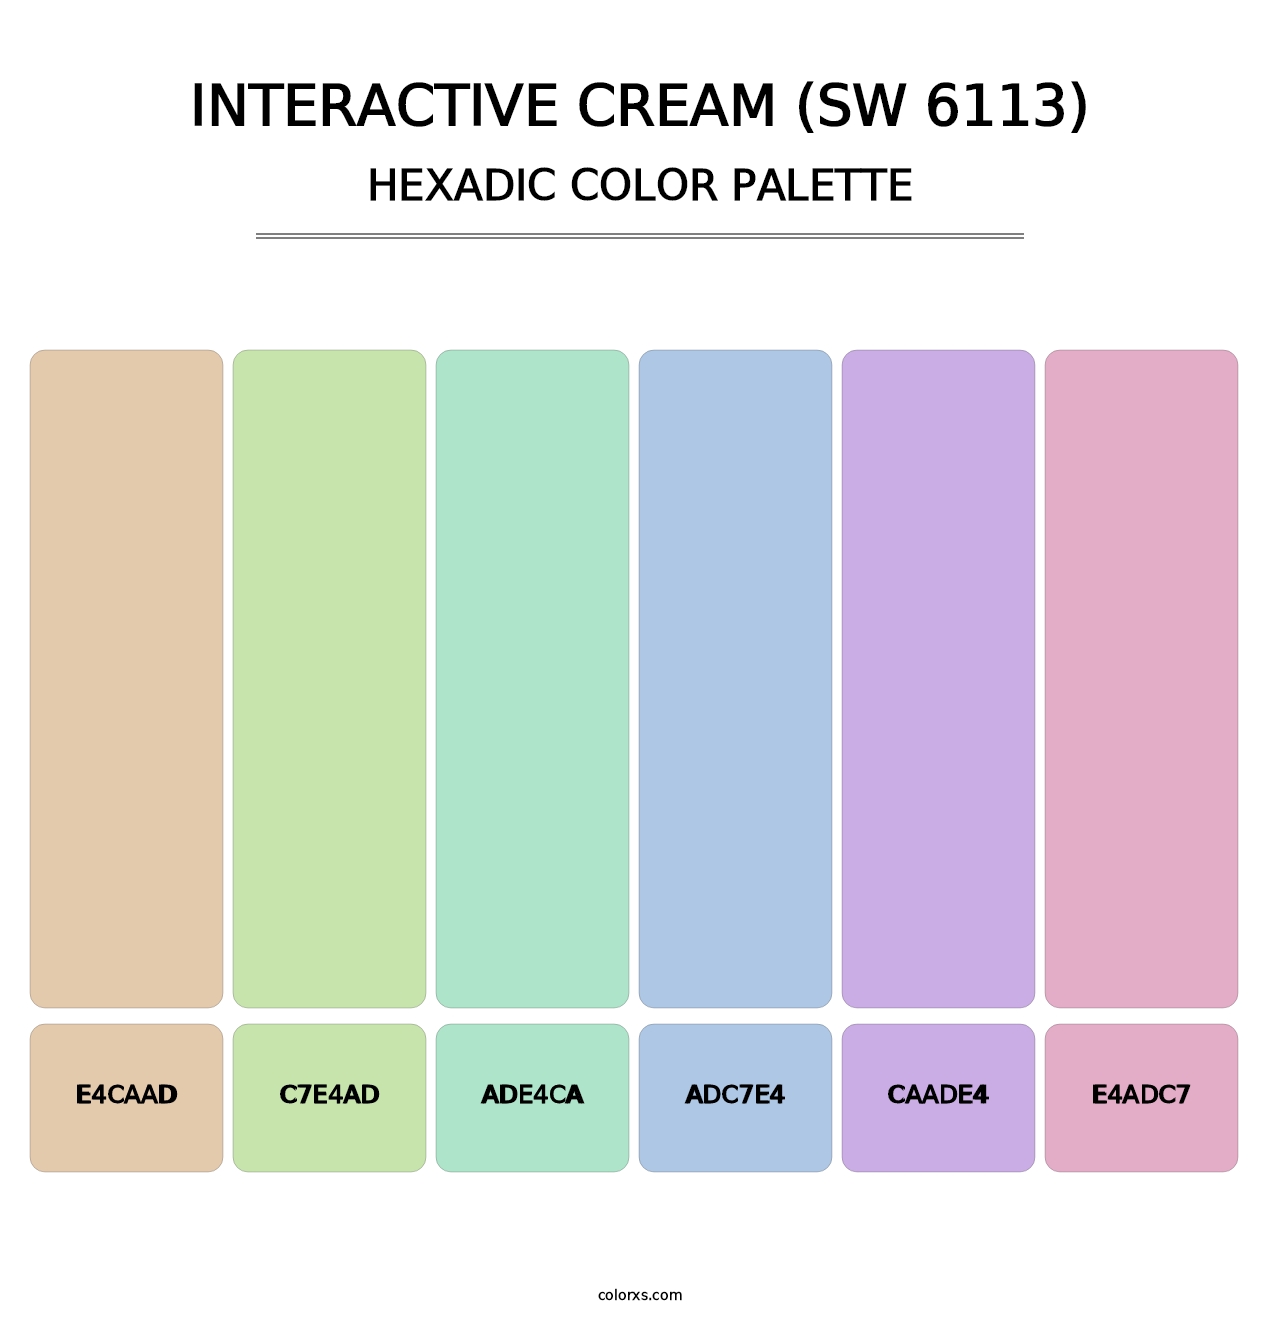 Interactive Cream (SW 6113) - Hexadic Color Palette